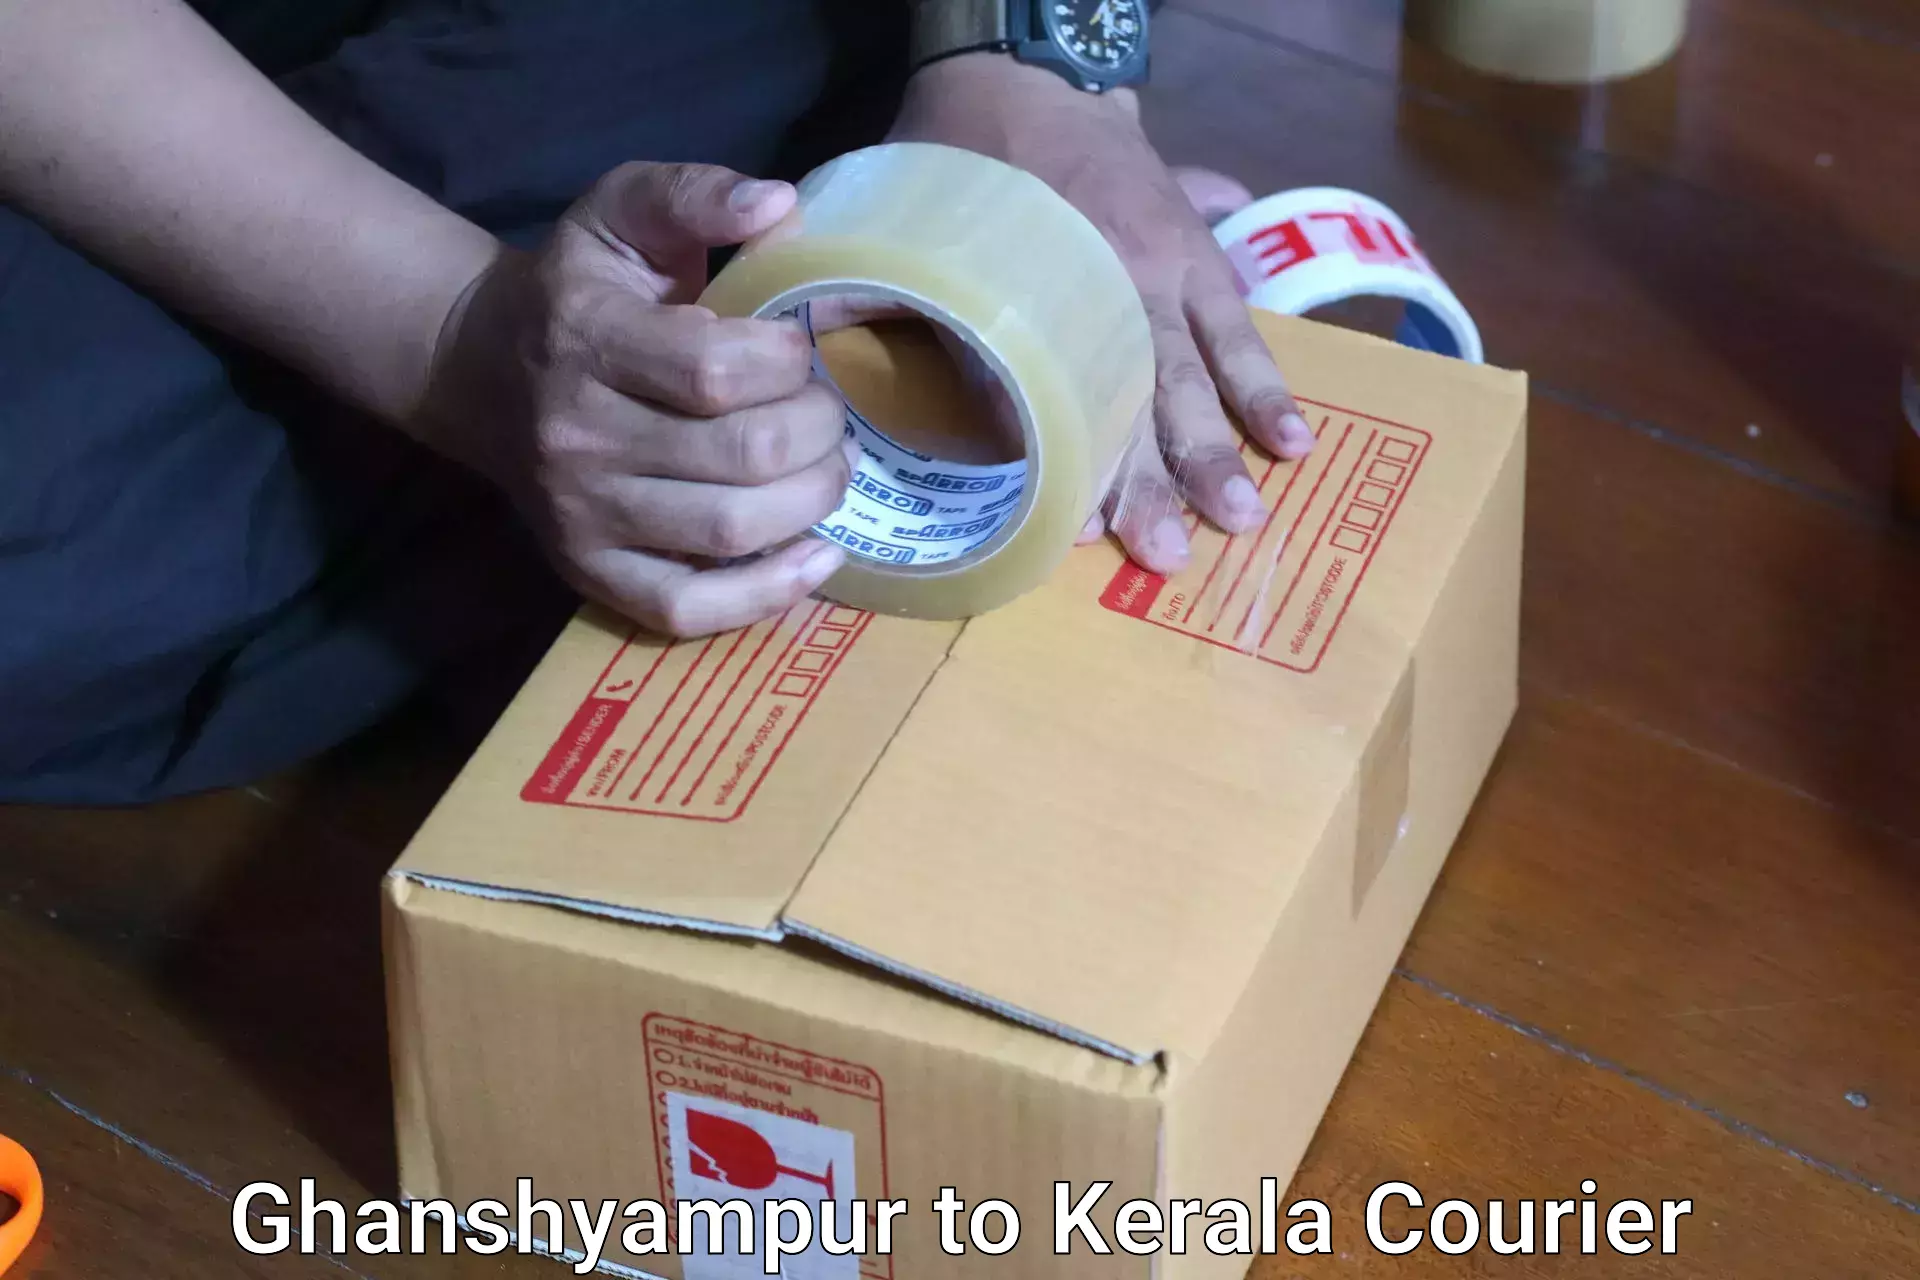 Baggage shipping experts Ghanshyampur to Kerala